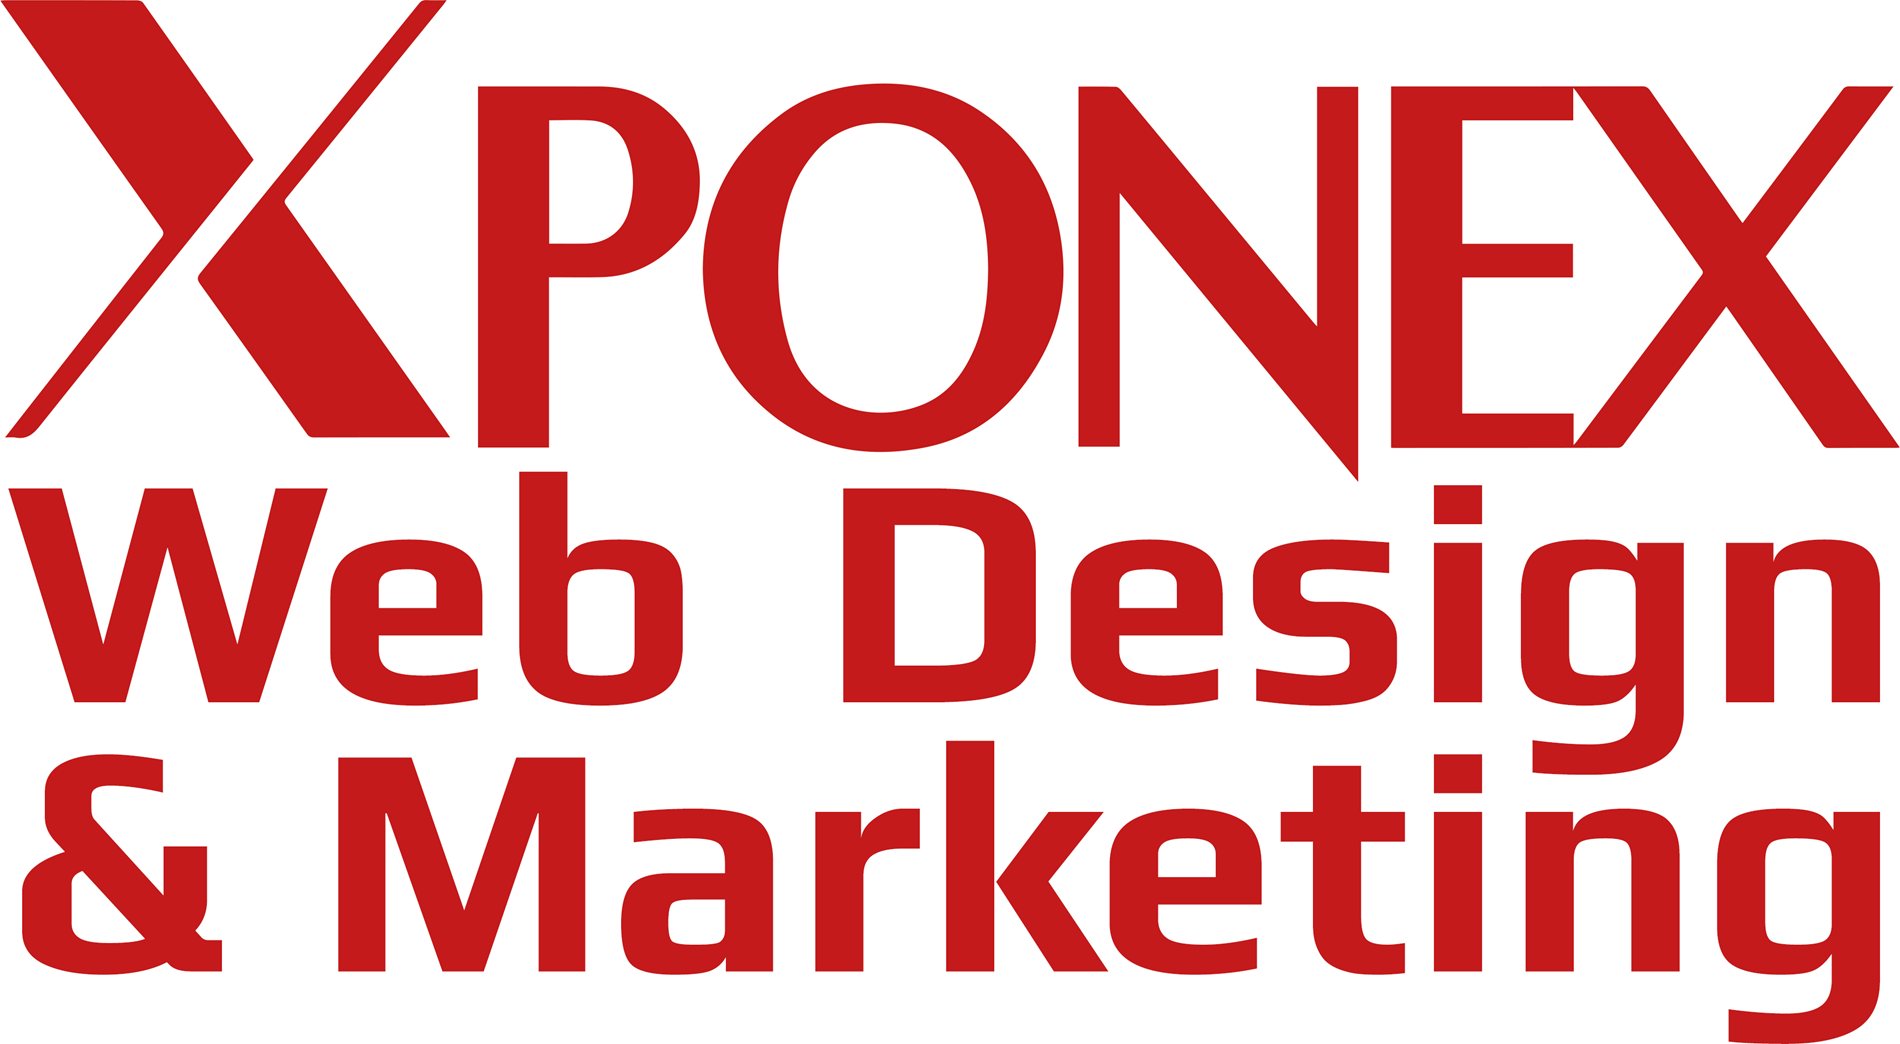 Xponex Web Design and Marketing